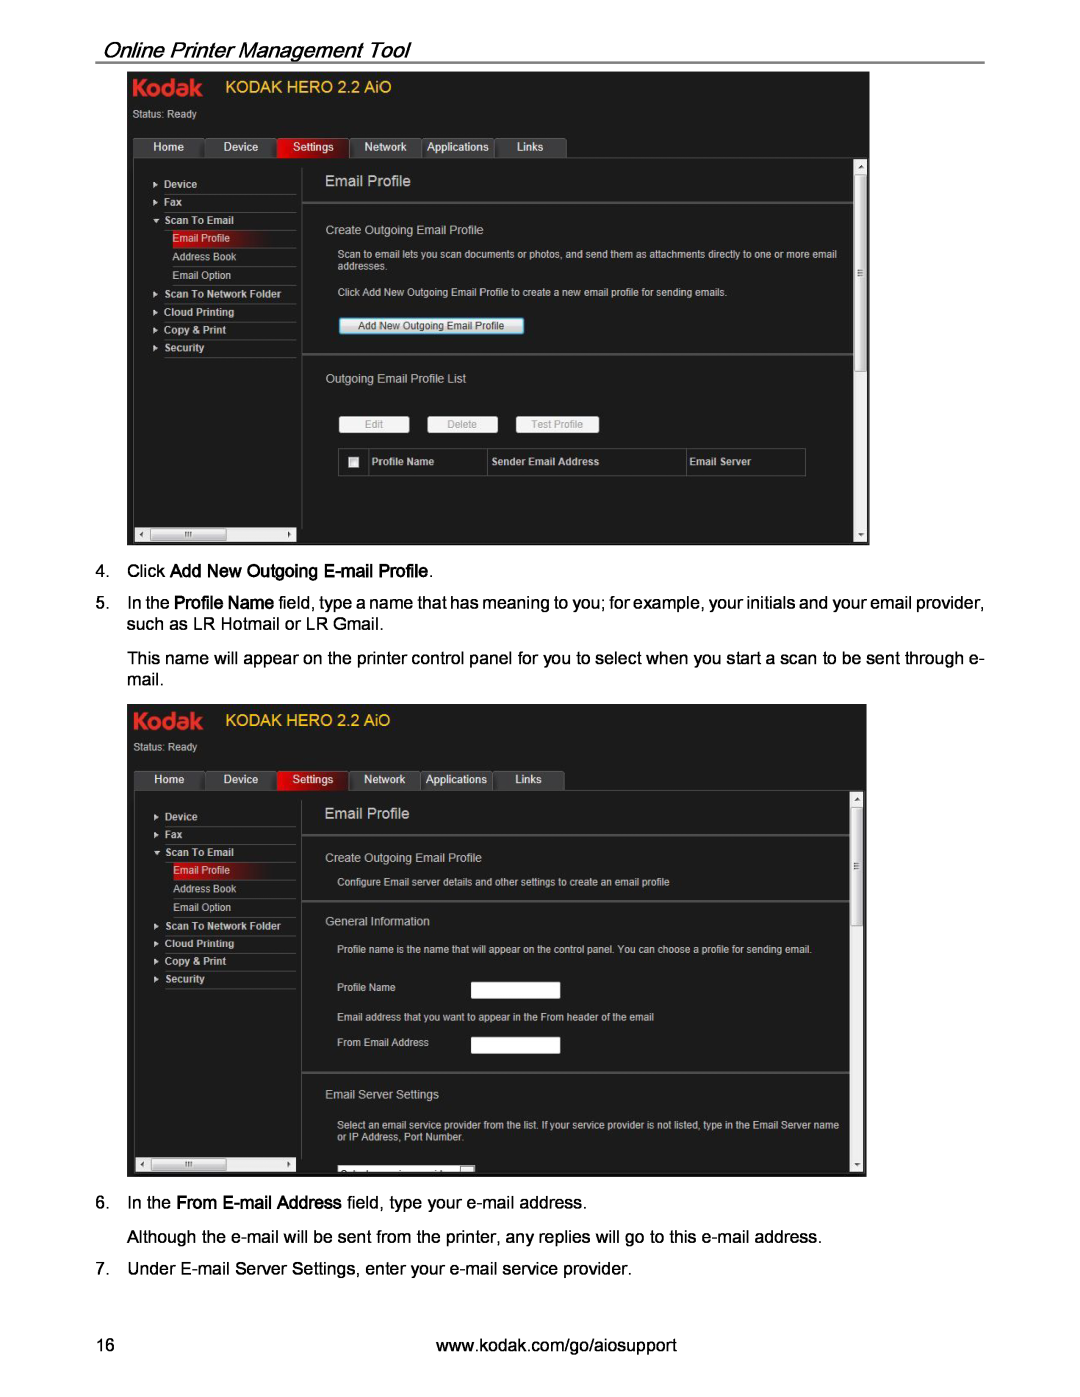 Kodak 2.2 manual Click Add New Outgoing E-mail Profile, Online Printer Management Tool 